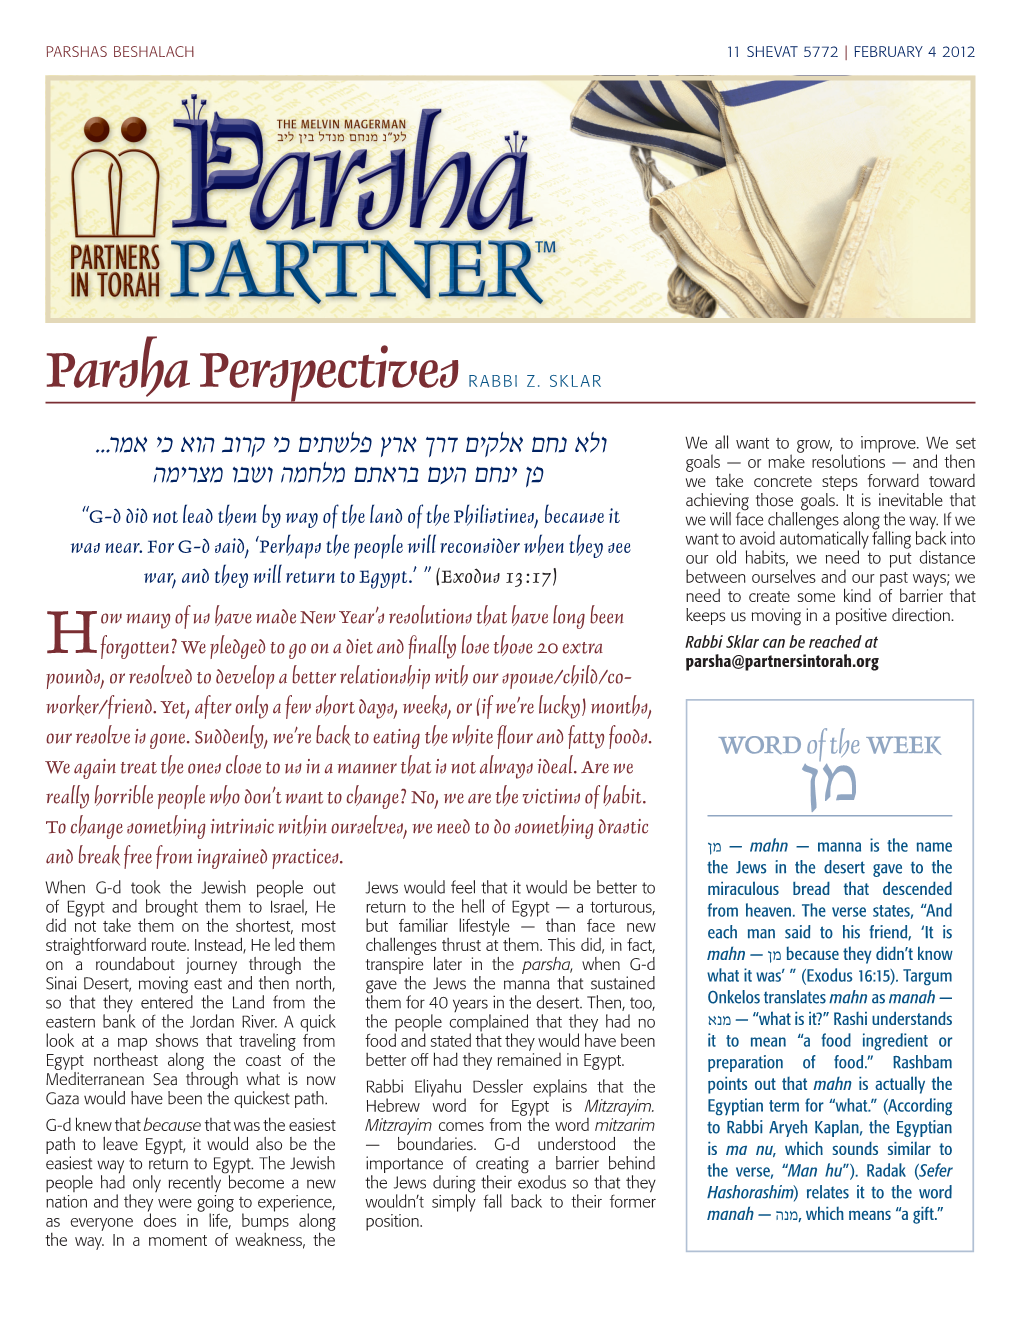 Parsha Perspectivesrabbi Z. SKLAR